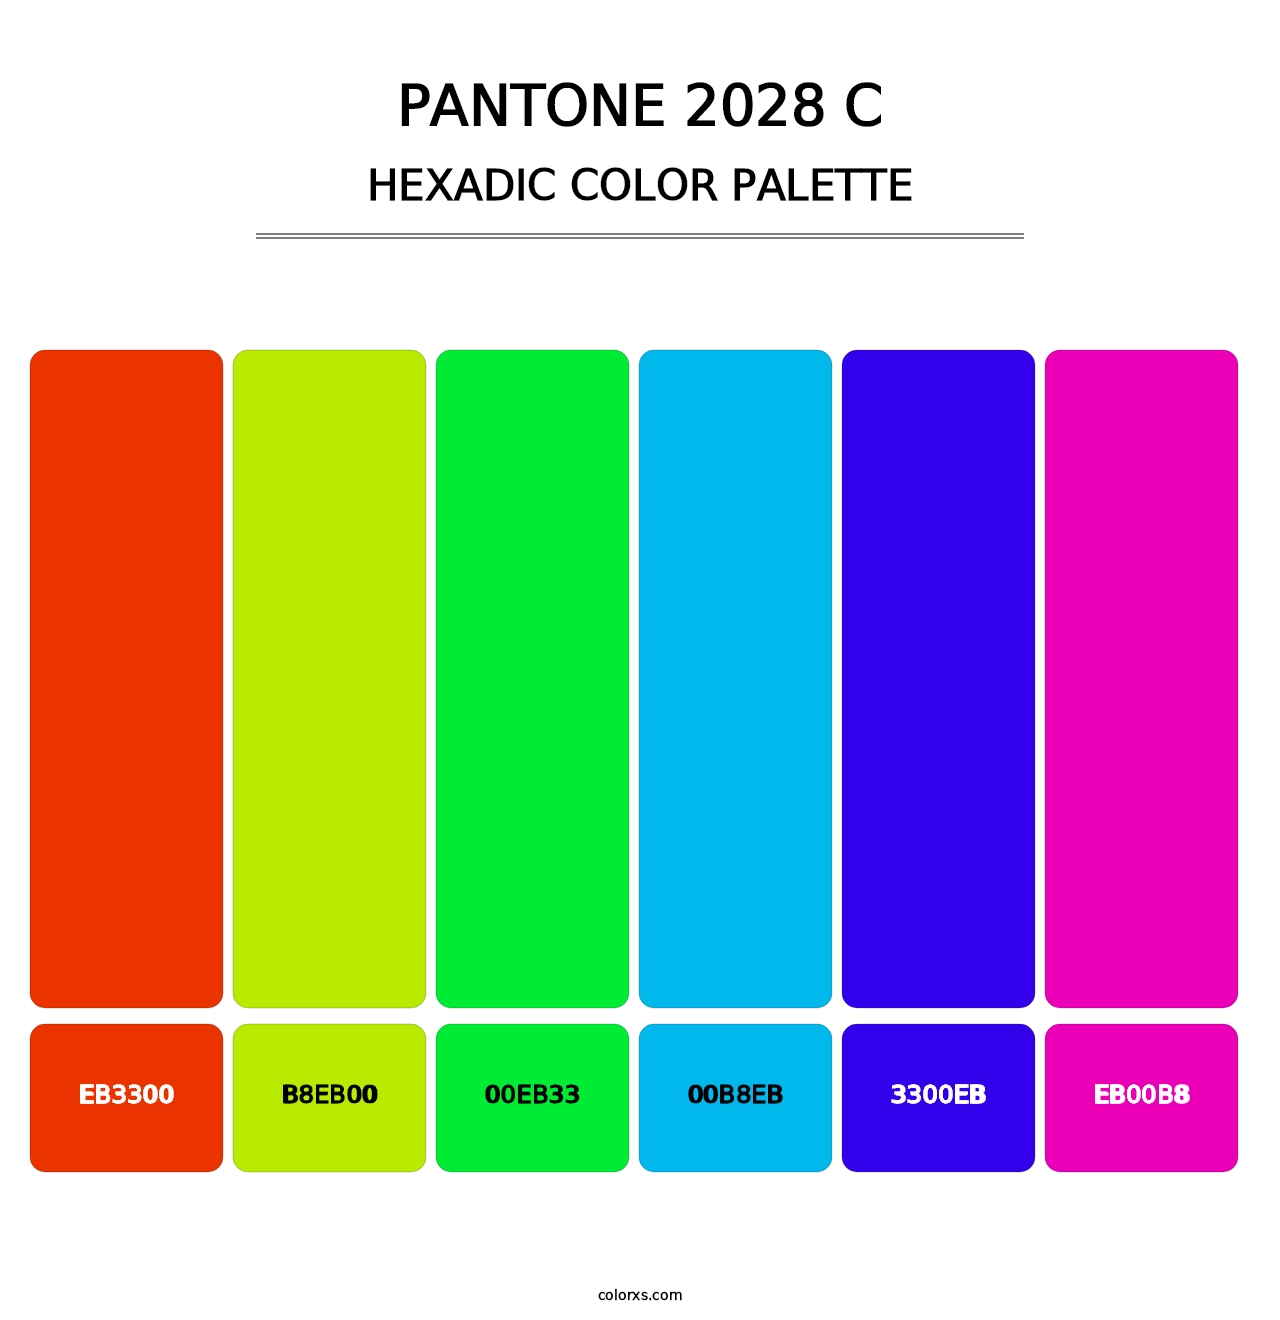 PANTONE 2028 C - Hexadic Color Palette